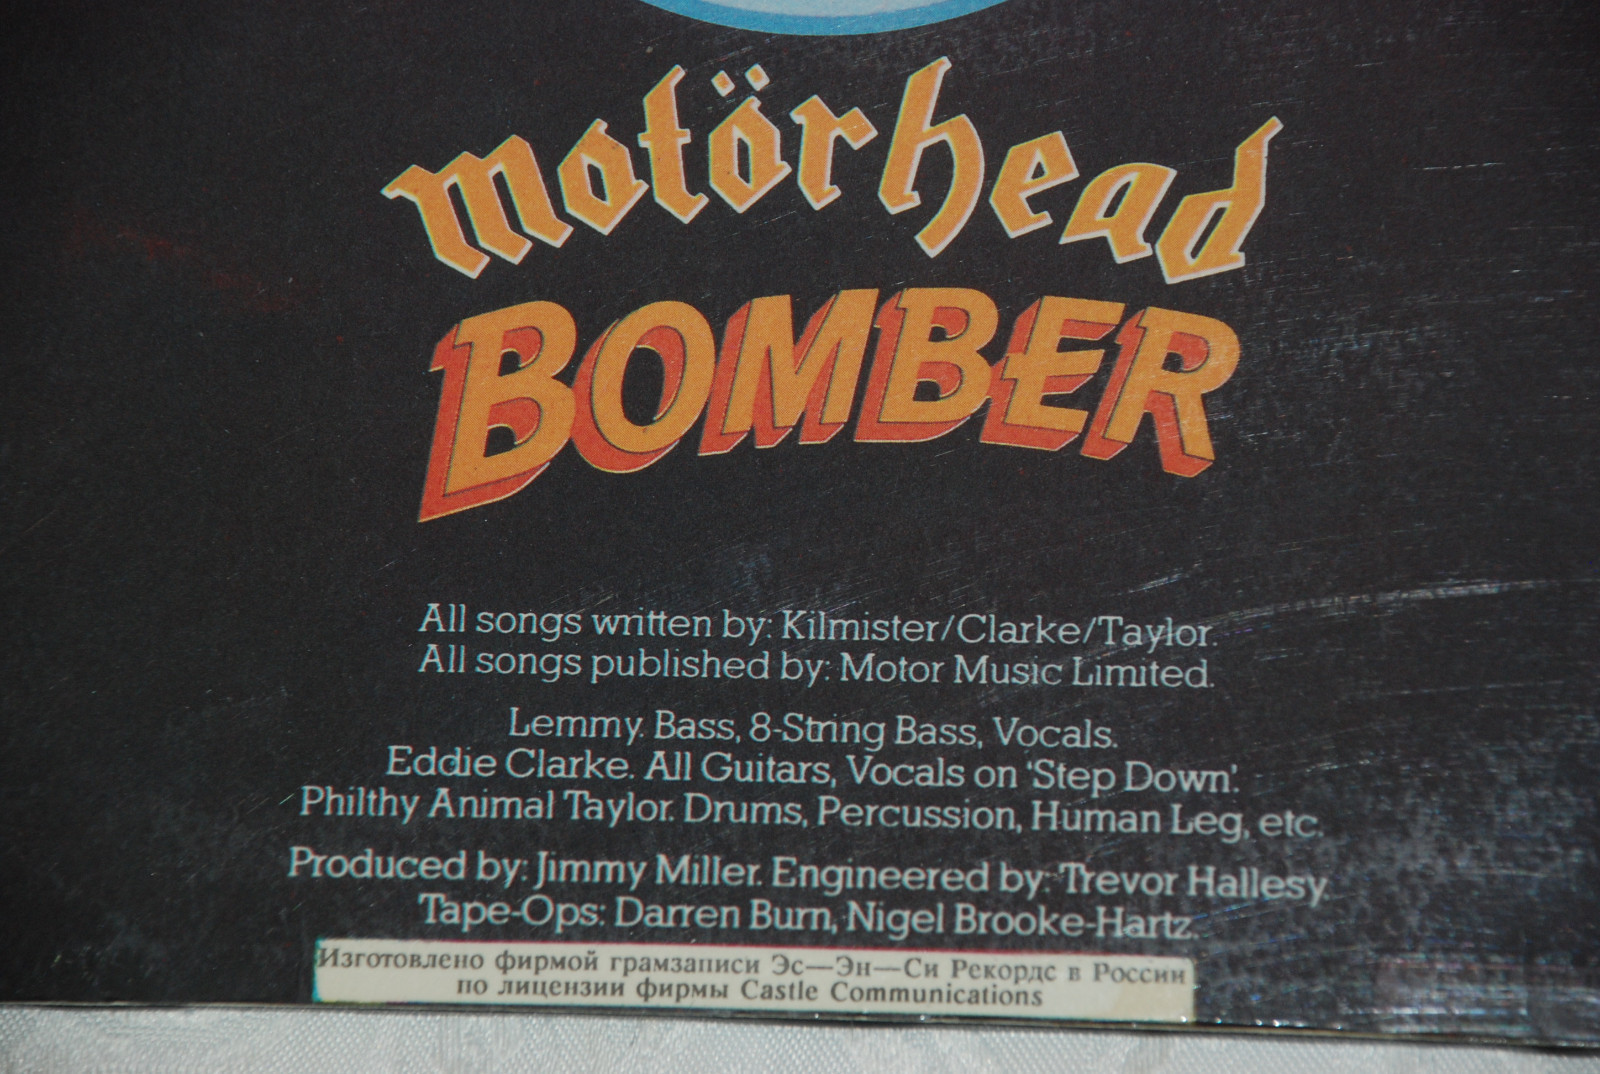 Motorhead. "Bomber"